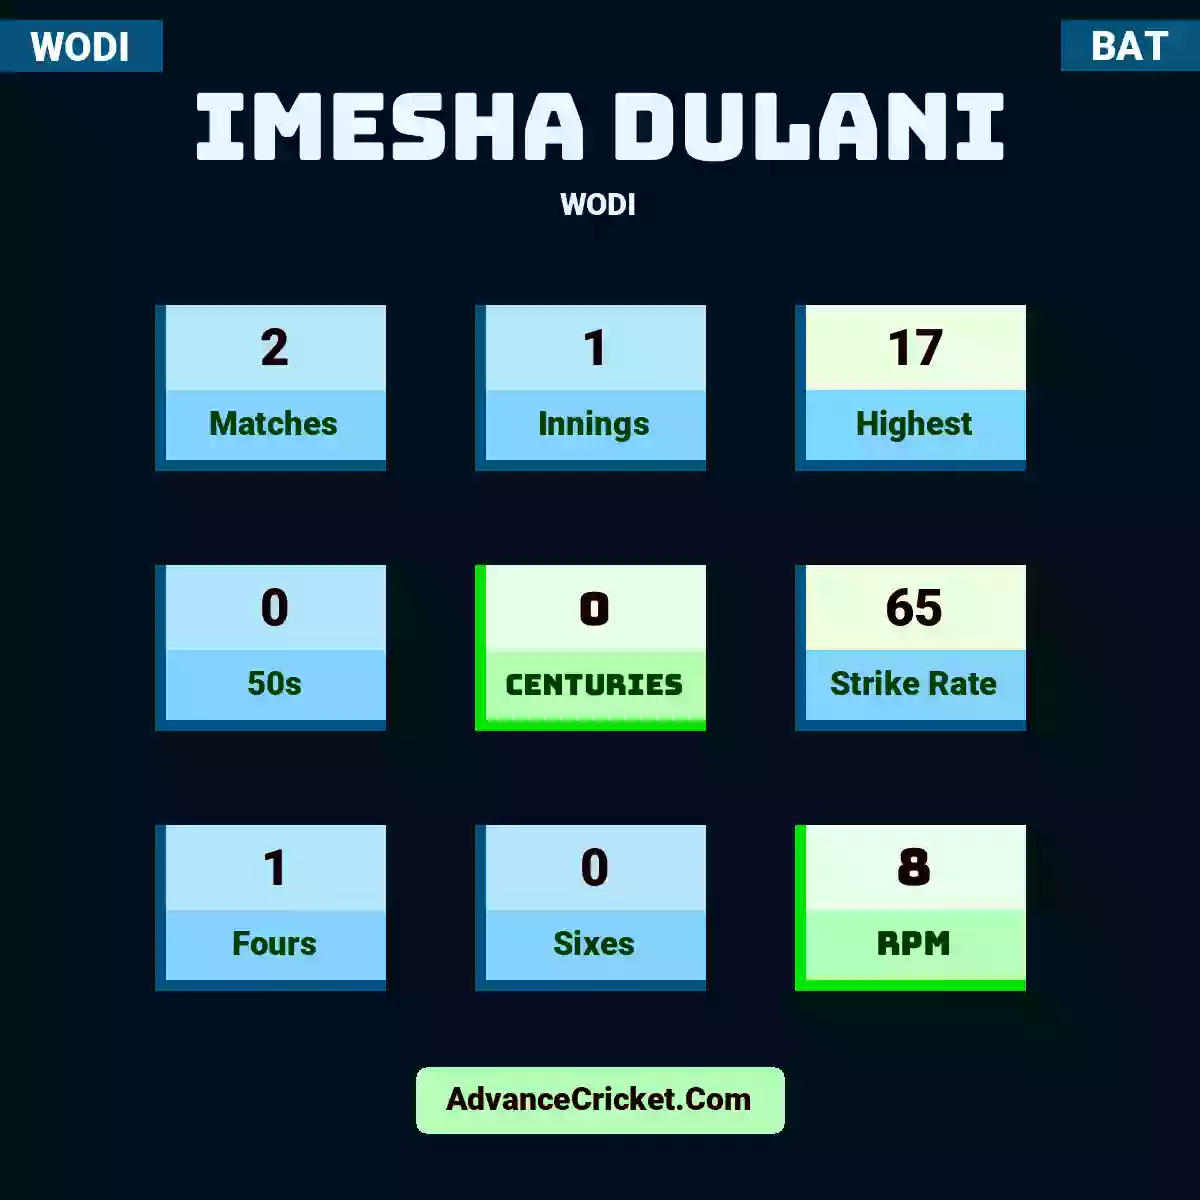 Imesha Dulani WODI , Imesha Dulani played 2 matches, scored 17 runs as highest, 0 half-centuries, and 0 centuries, with a strike rate of 65. I.Dulani hit 1 fours and 0 sixes, with an RPM of 8.